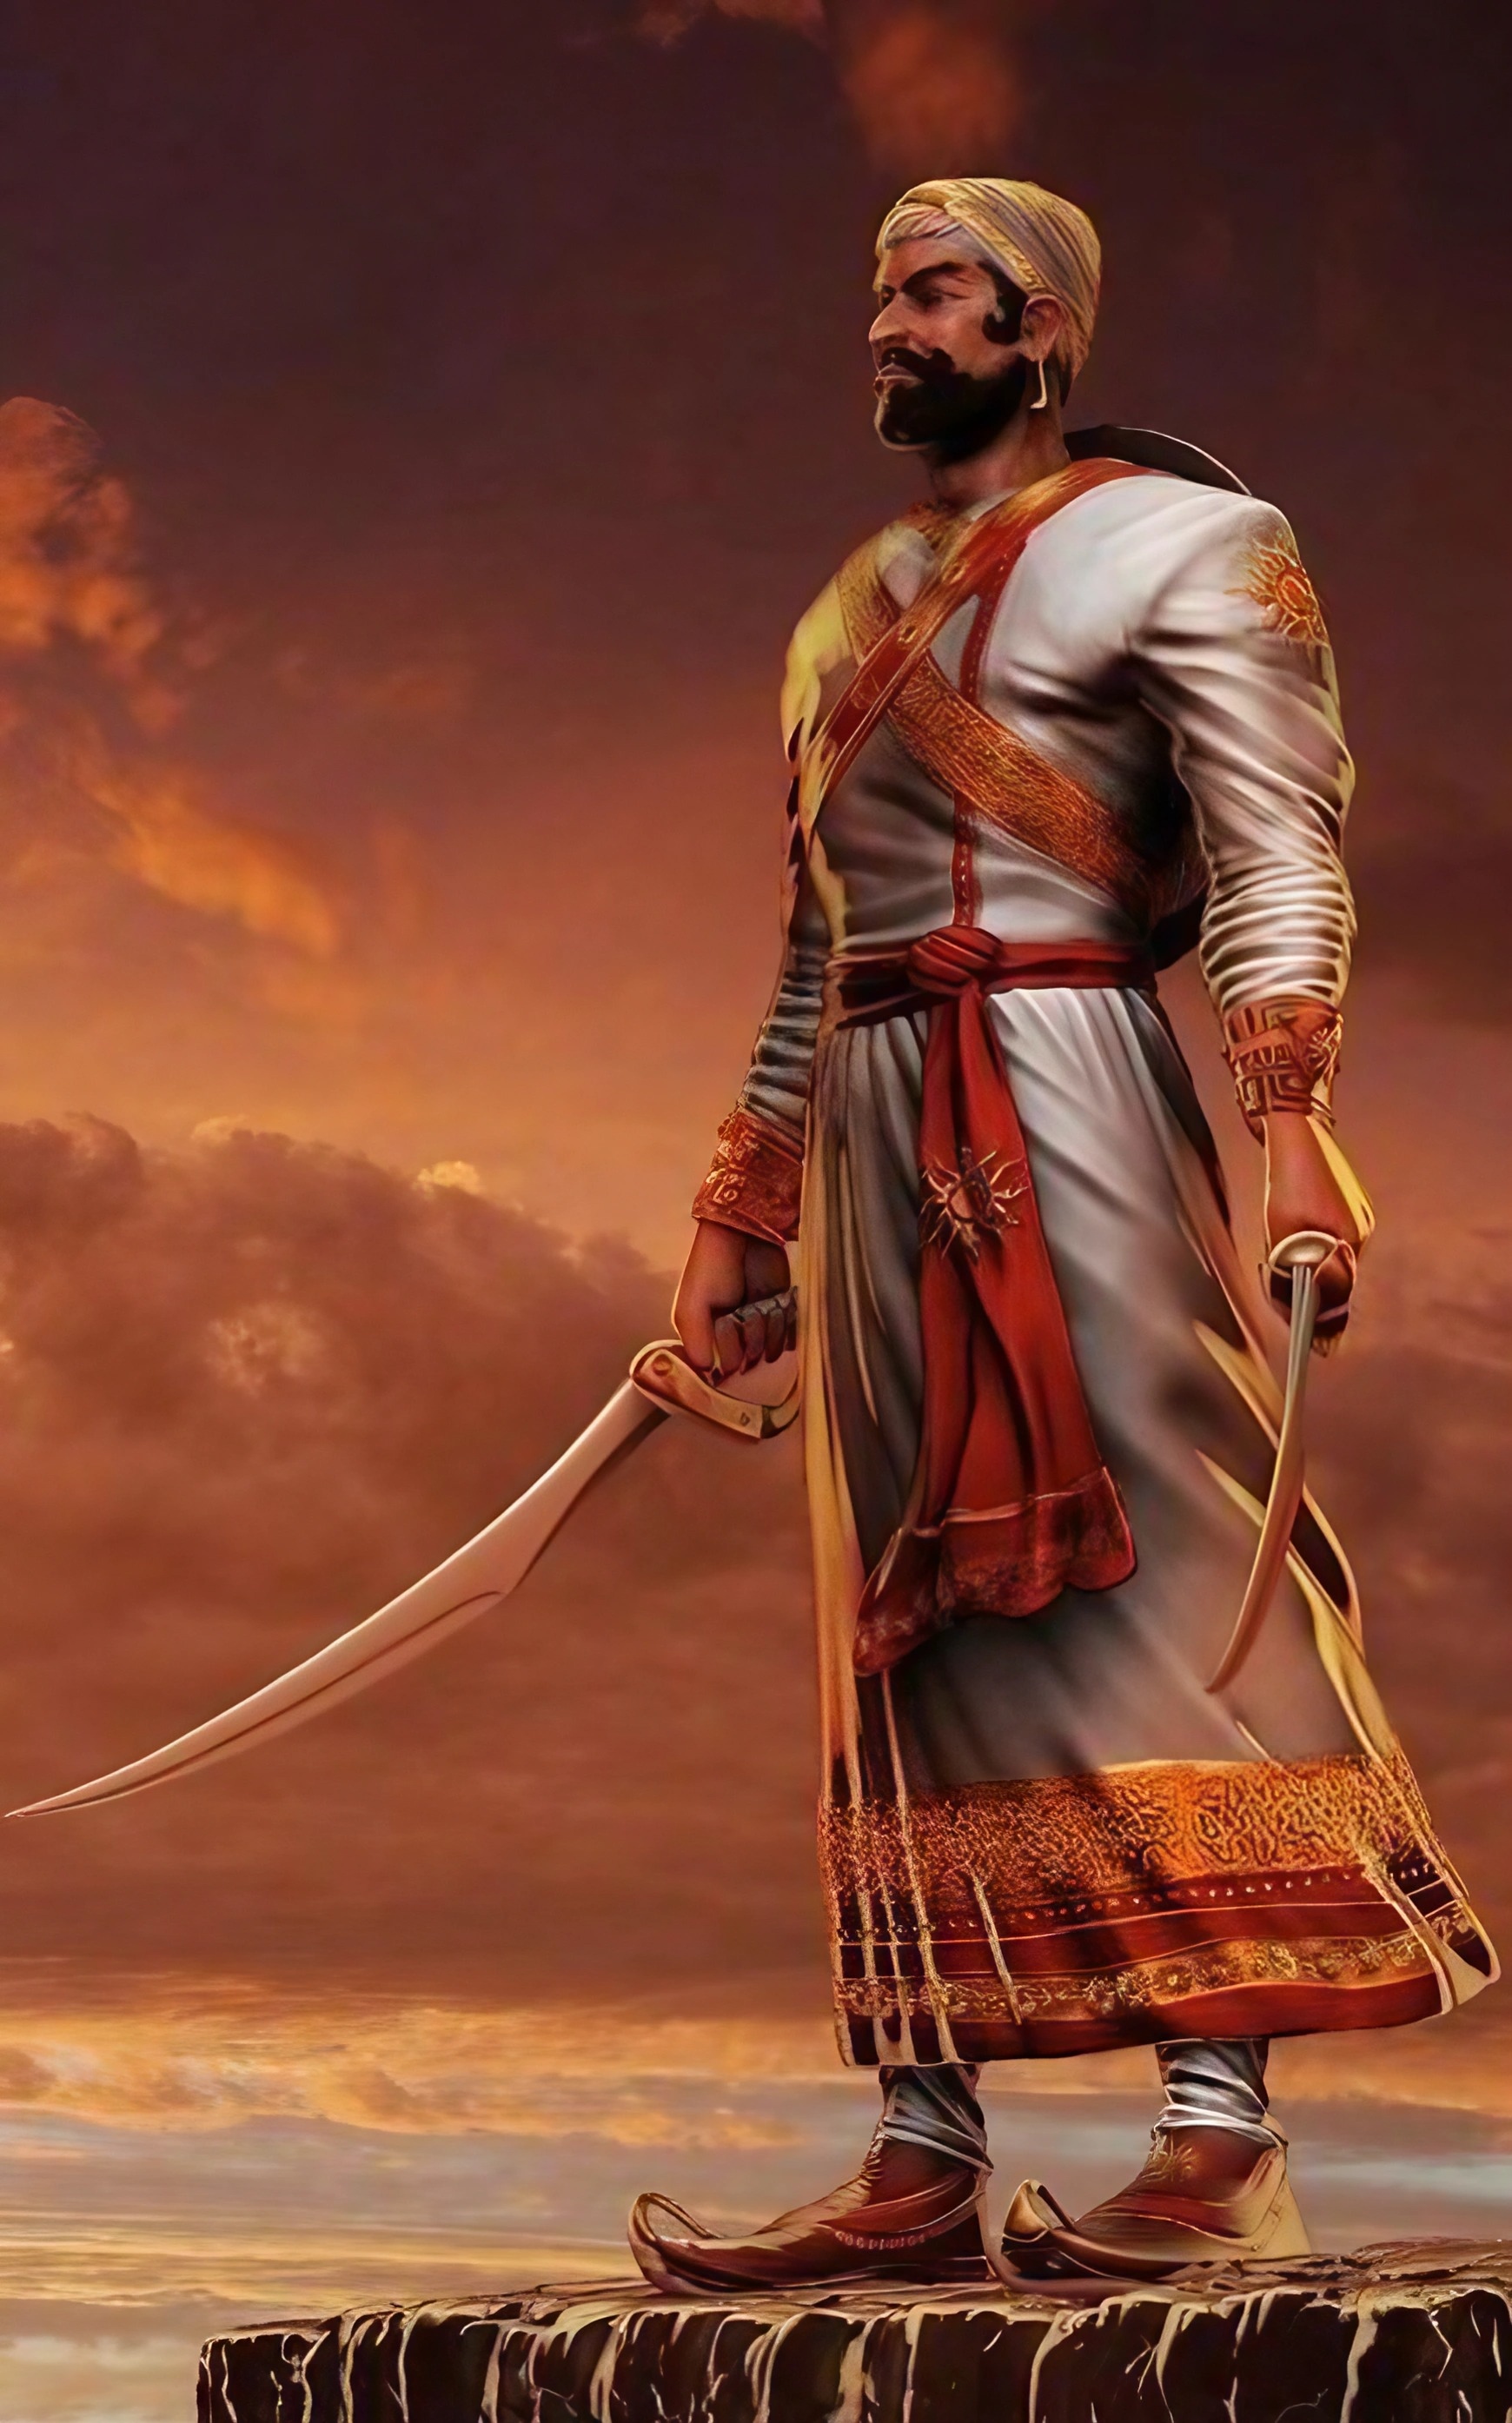 Shambhuraje Standing With Sword